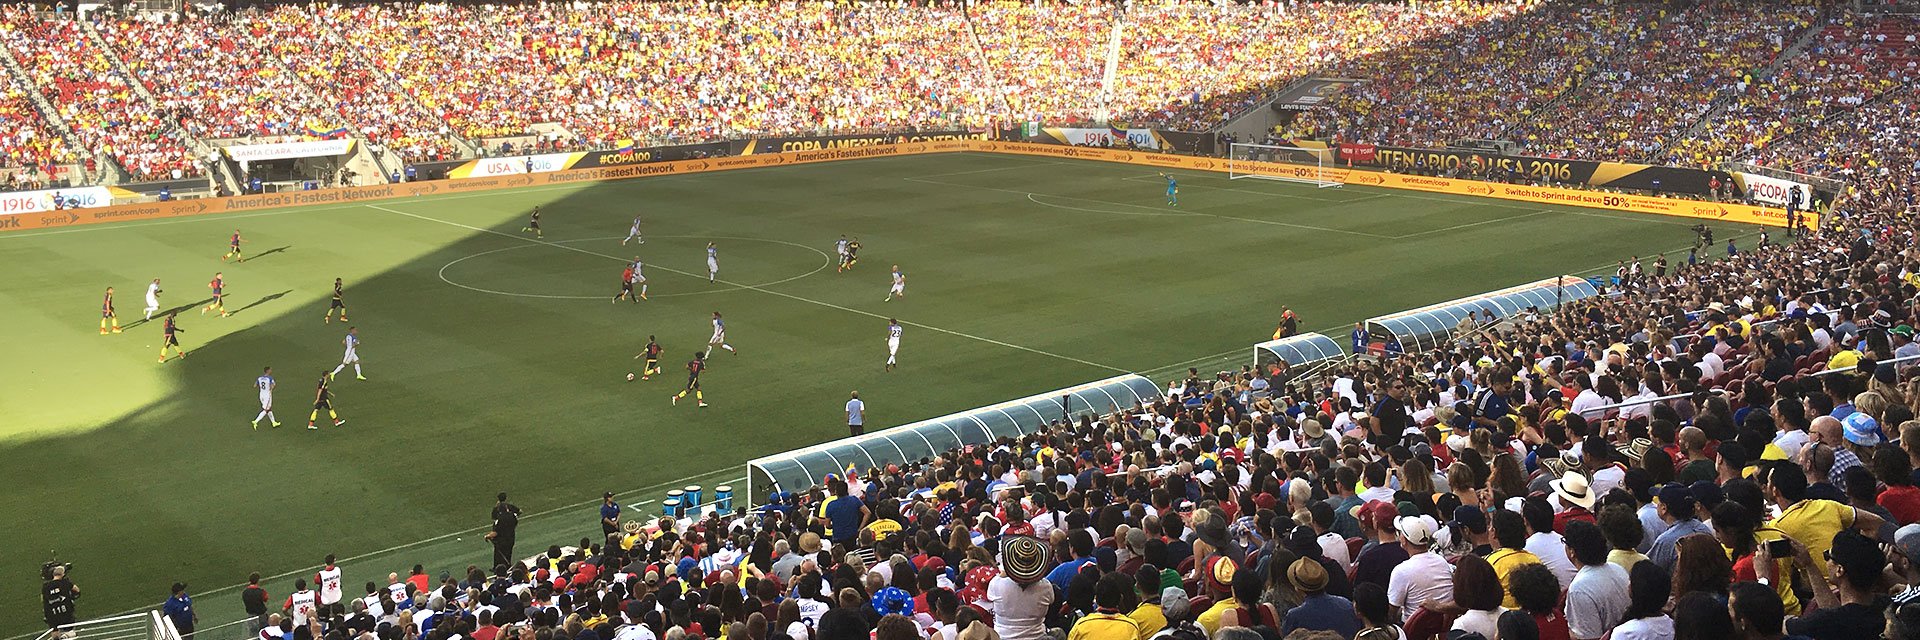 2016_Futbol_CopaAmerica_05.jpg